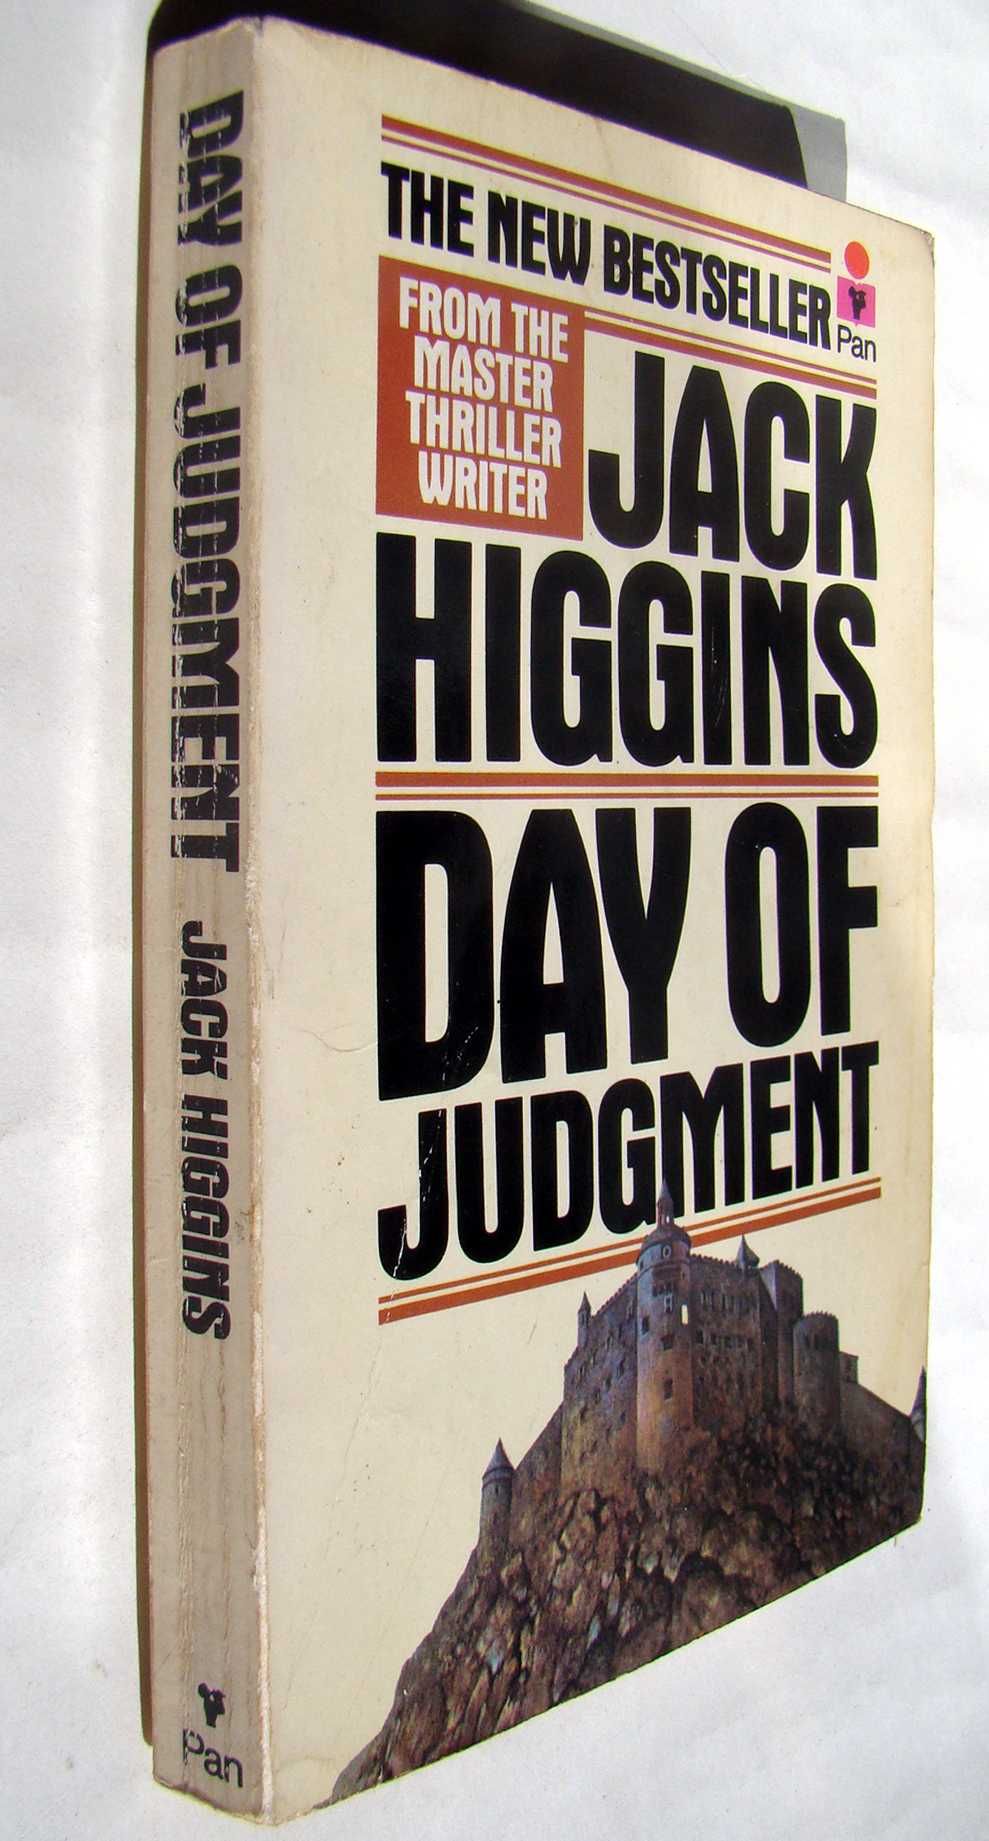 Day of Judgment - Jack Higgins